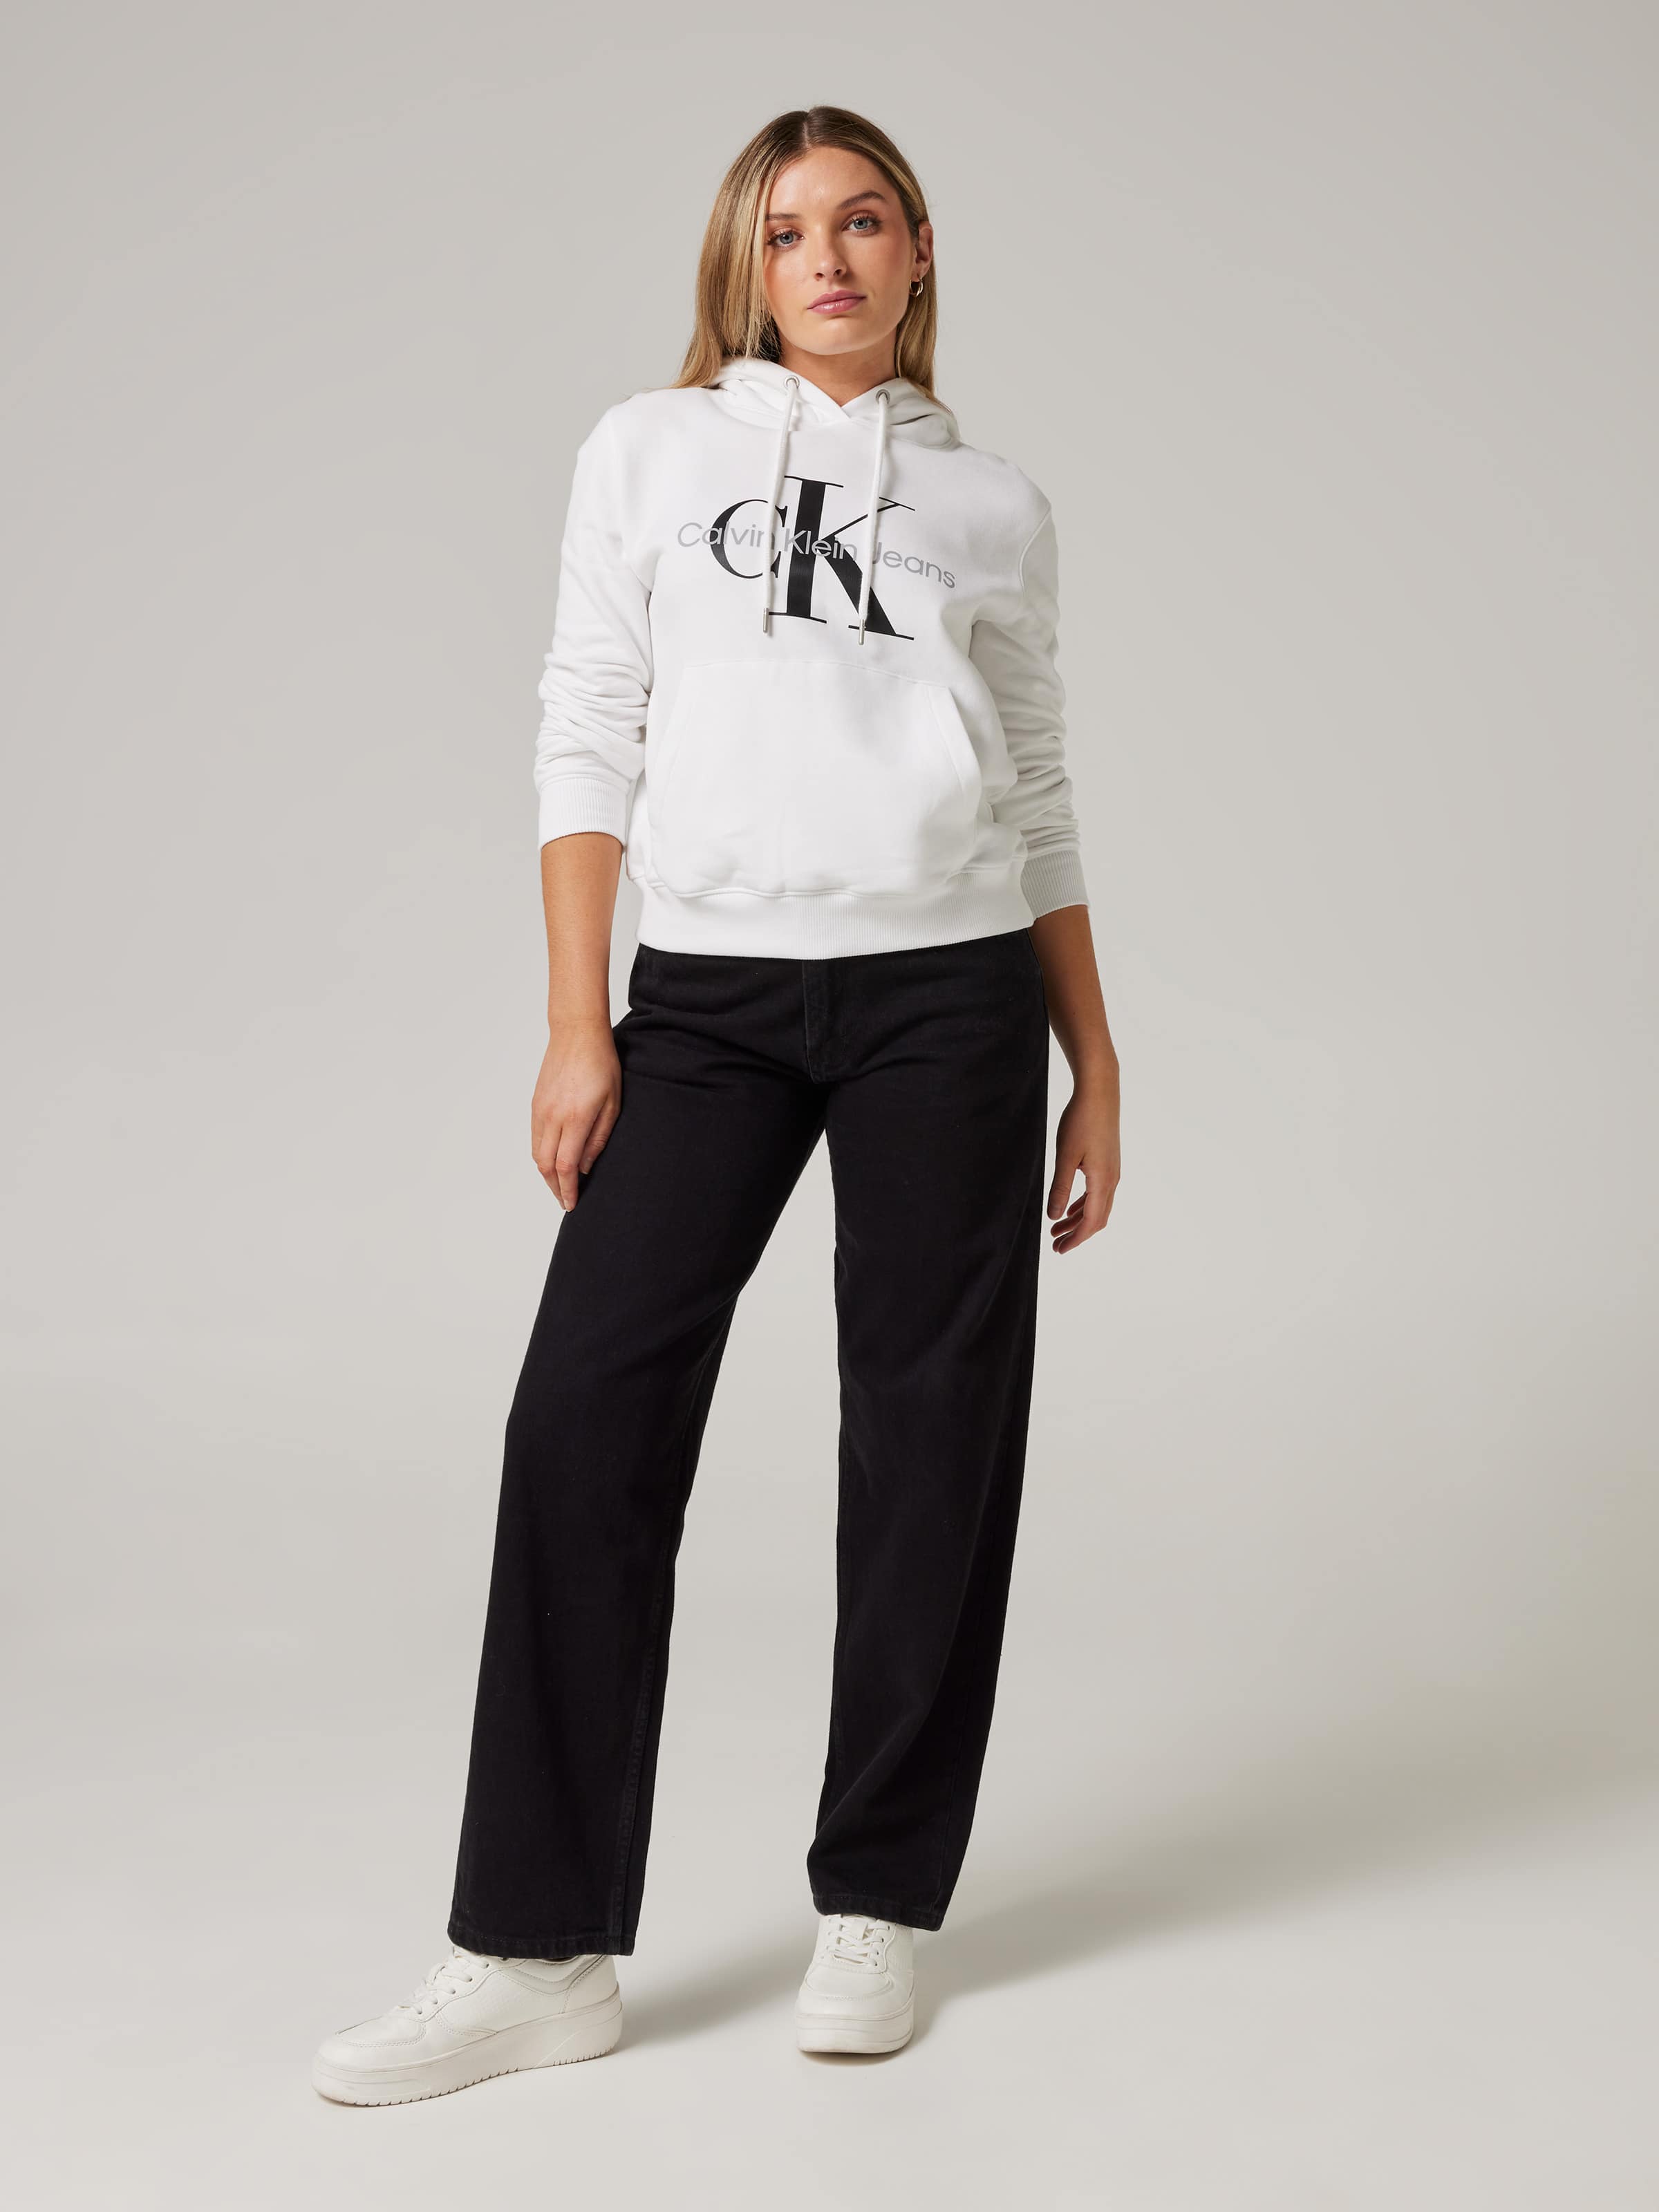 Core Monogram Logo Sweatshirt by Calvin Klein Jeans Online, THE ICONIC